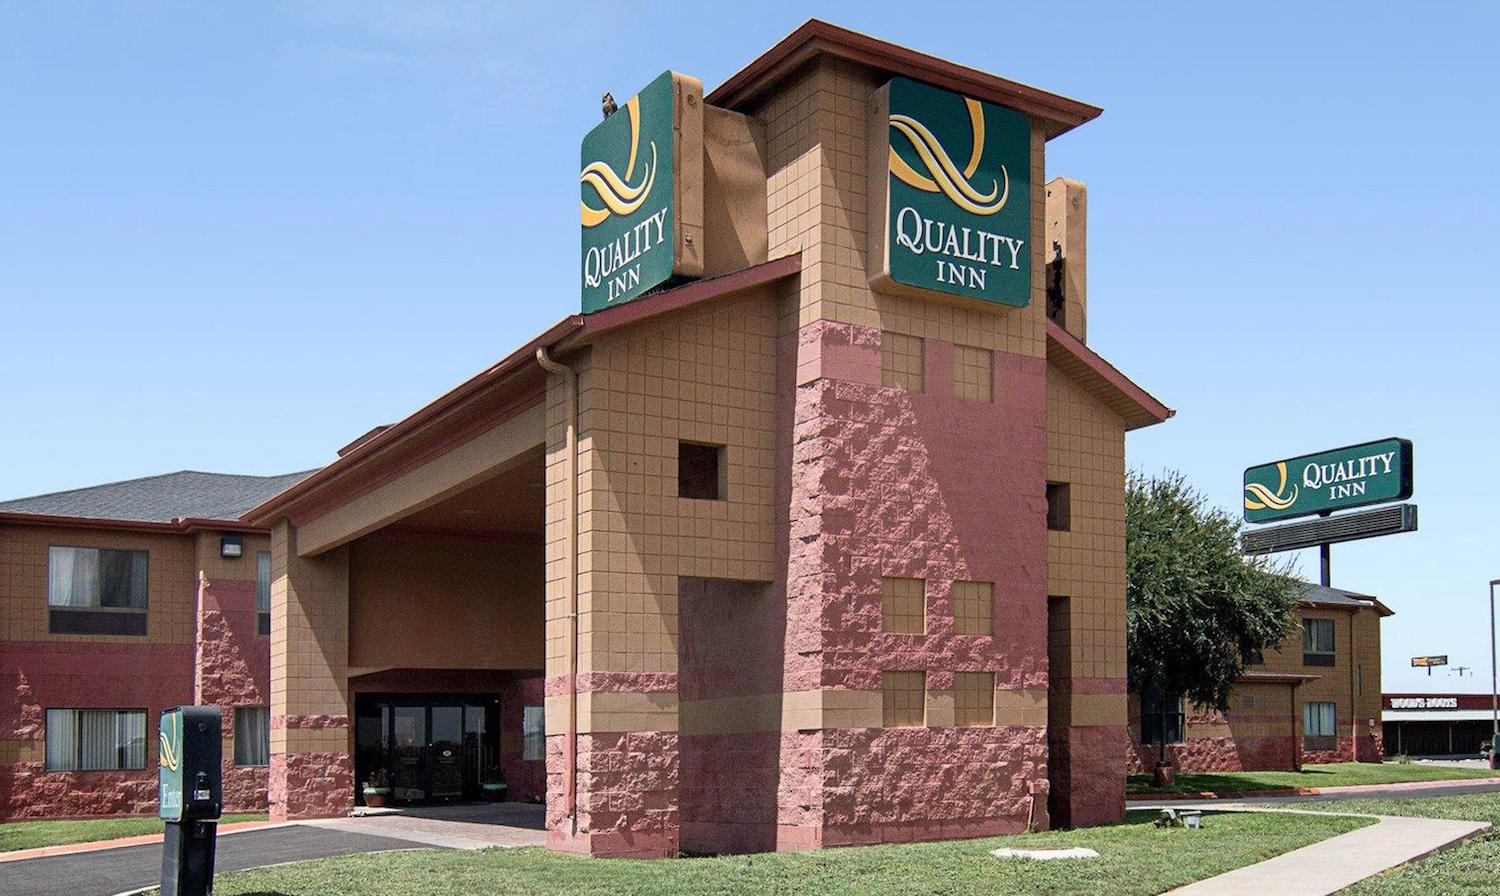 Photo of Quality Inn Midland, Midland, TX